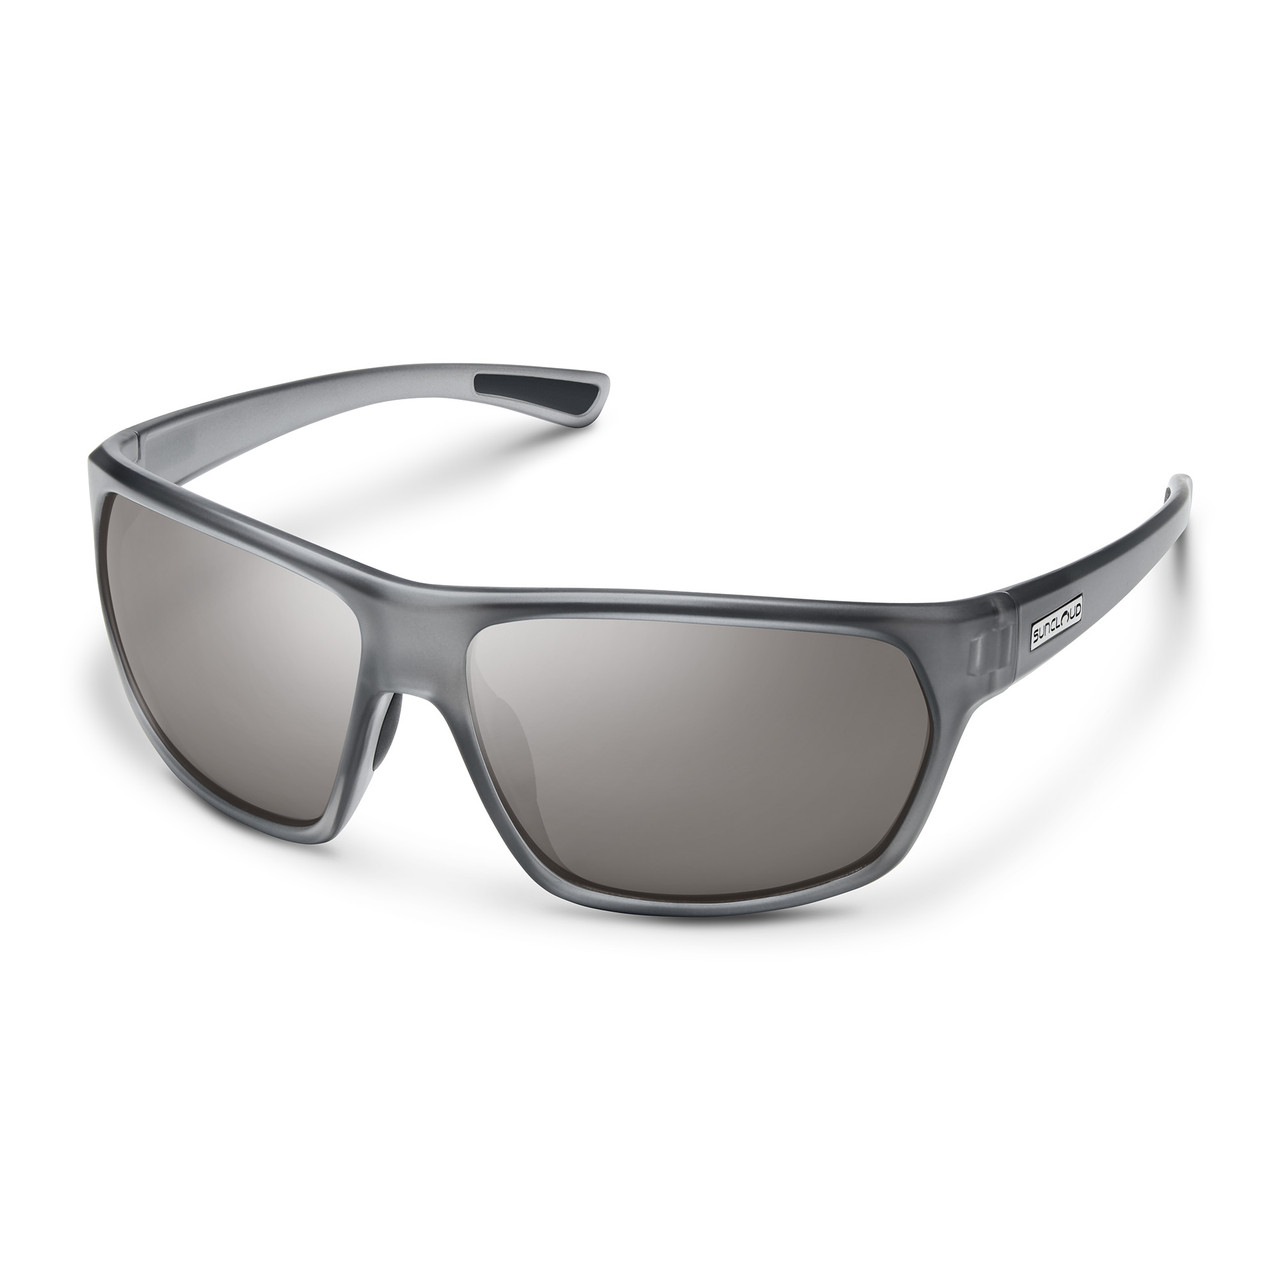 Profile View of Suncloud Boone Polarized Sunglasses Unisex Acetate Wrap Around in Matte Silver Gray & Silver Mirror